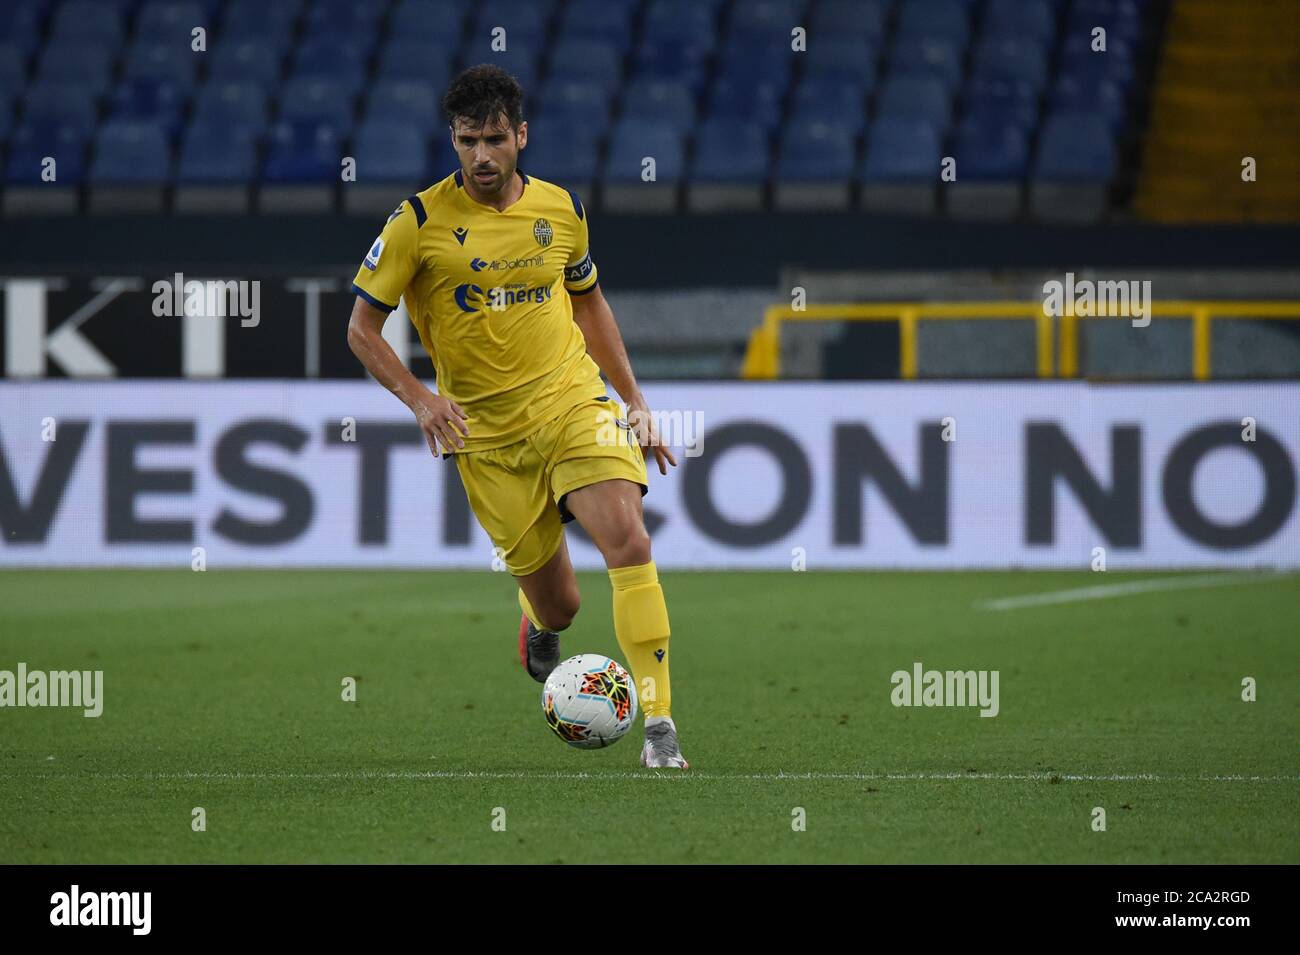 Miguel Luis Pinto Veloso (Verona) during Genoa vs Hellas Verona, italian Serie A soccer match, Genova, Italy, 02 Aug 2020 Stock Photo